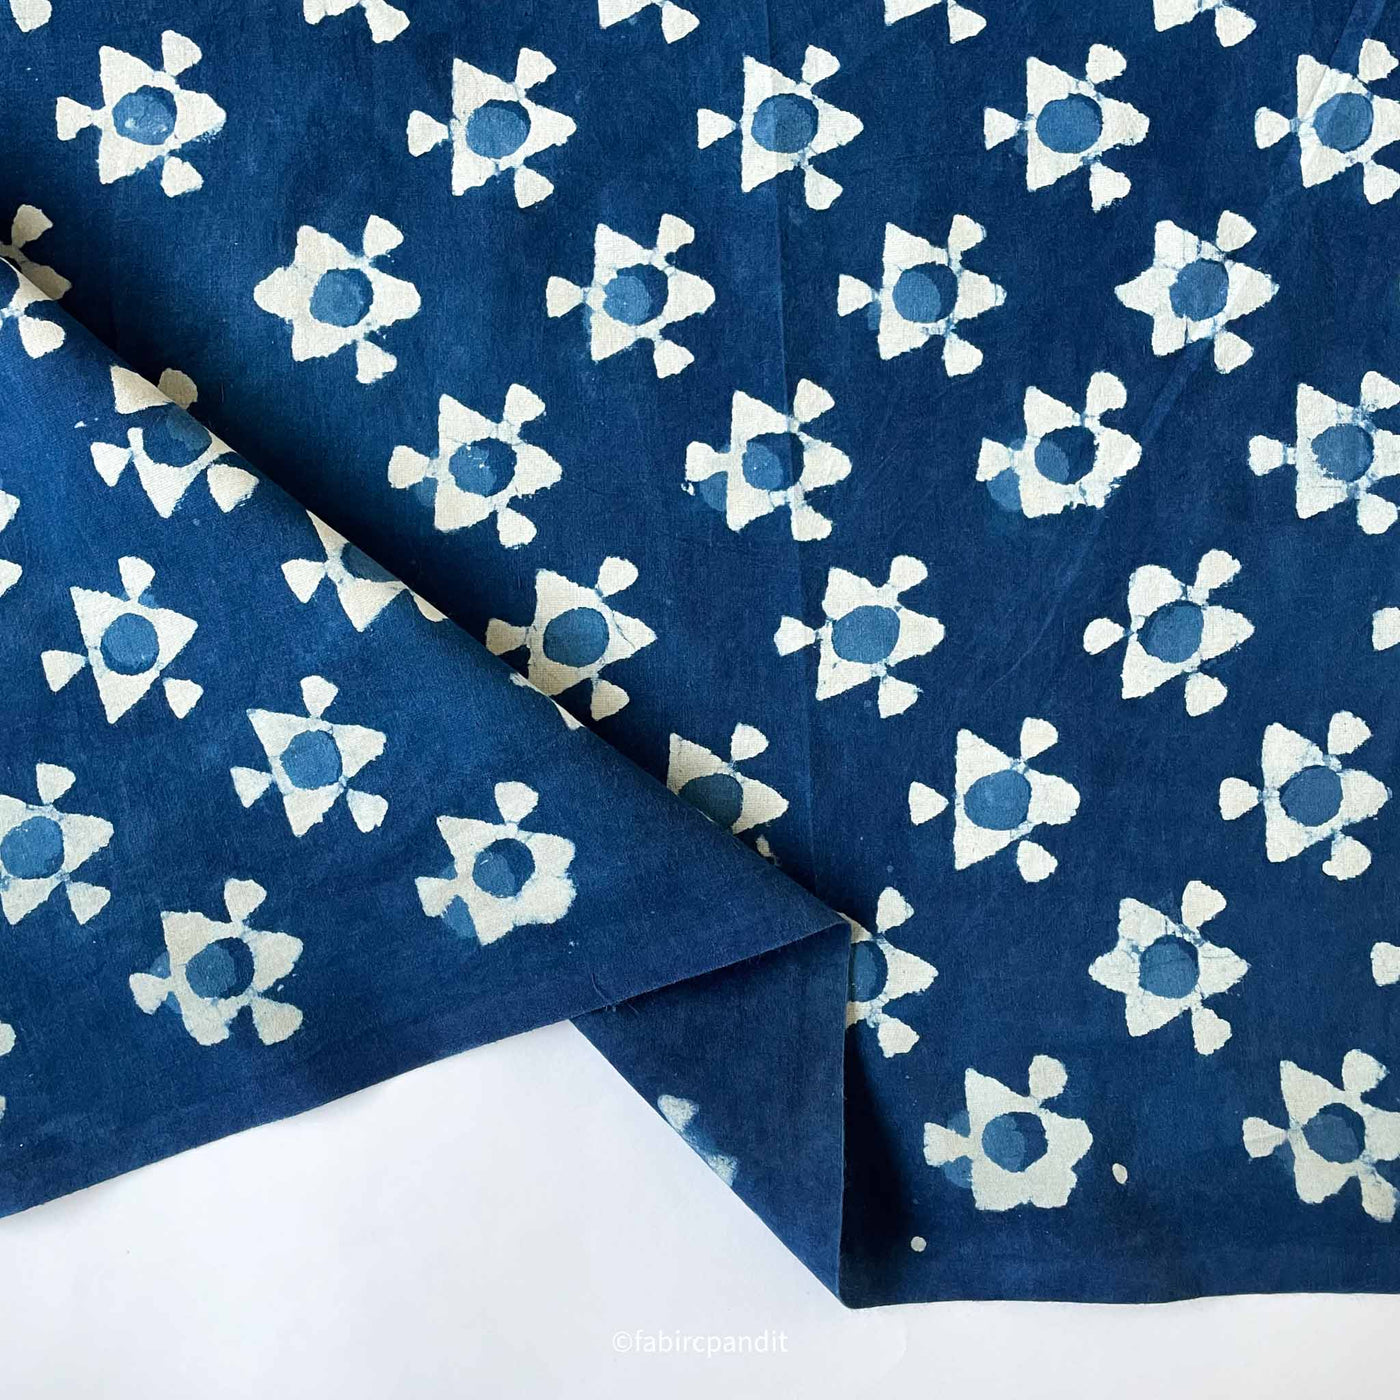 Fabric Pandit Cut Piece (Cut Piece) Indigo Dabu Natural Dyed Geometric Abstract Hand Block Printed Cotton Fabric (Width 43 inches)